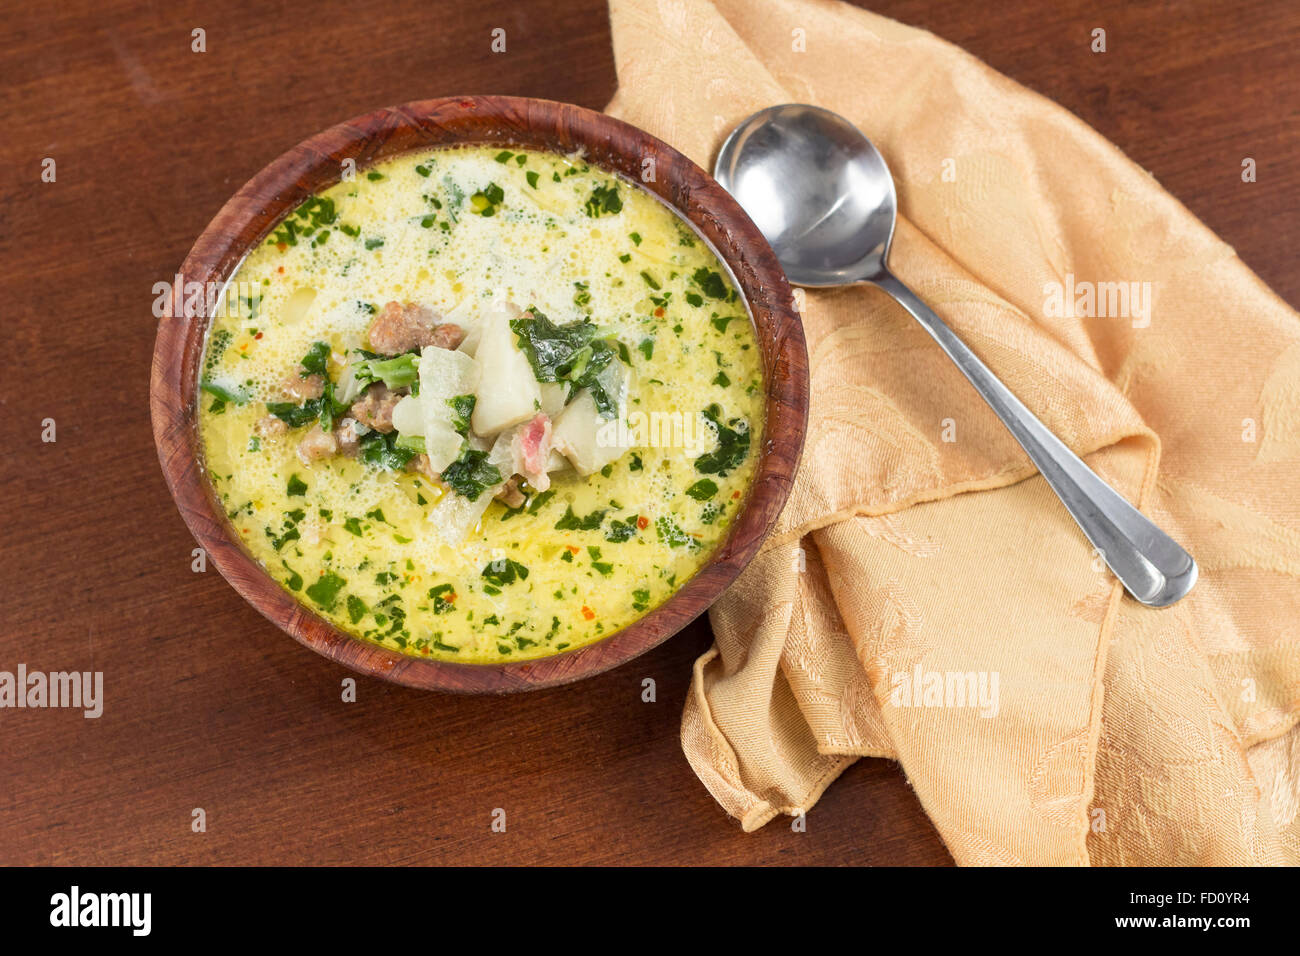 Sausage and kale zuppa toscana italian creamy soup Stock Photo